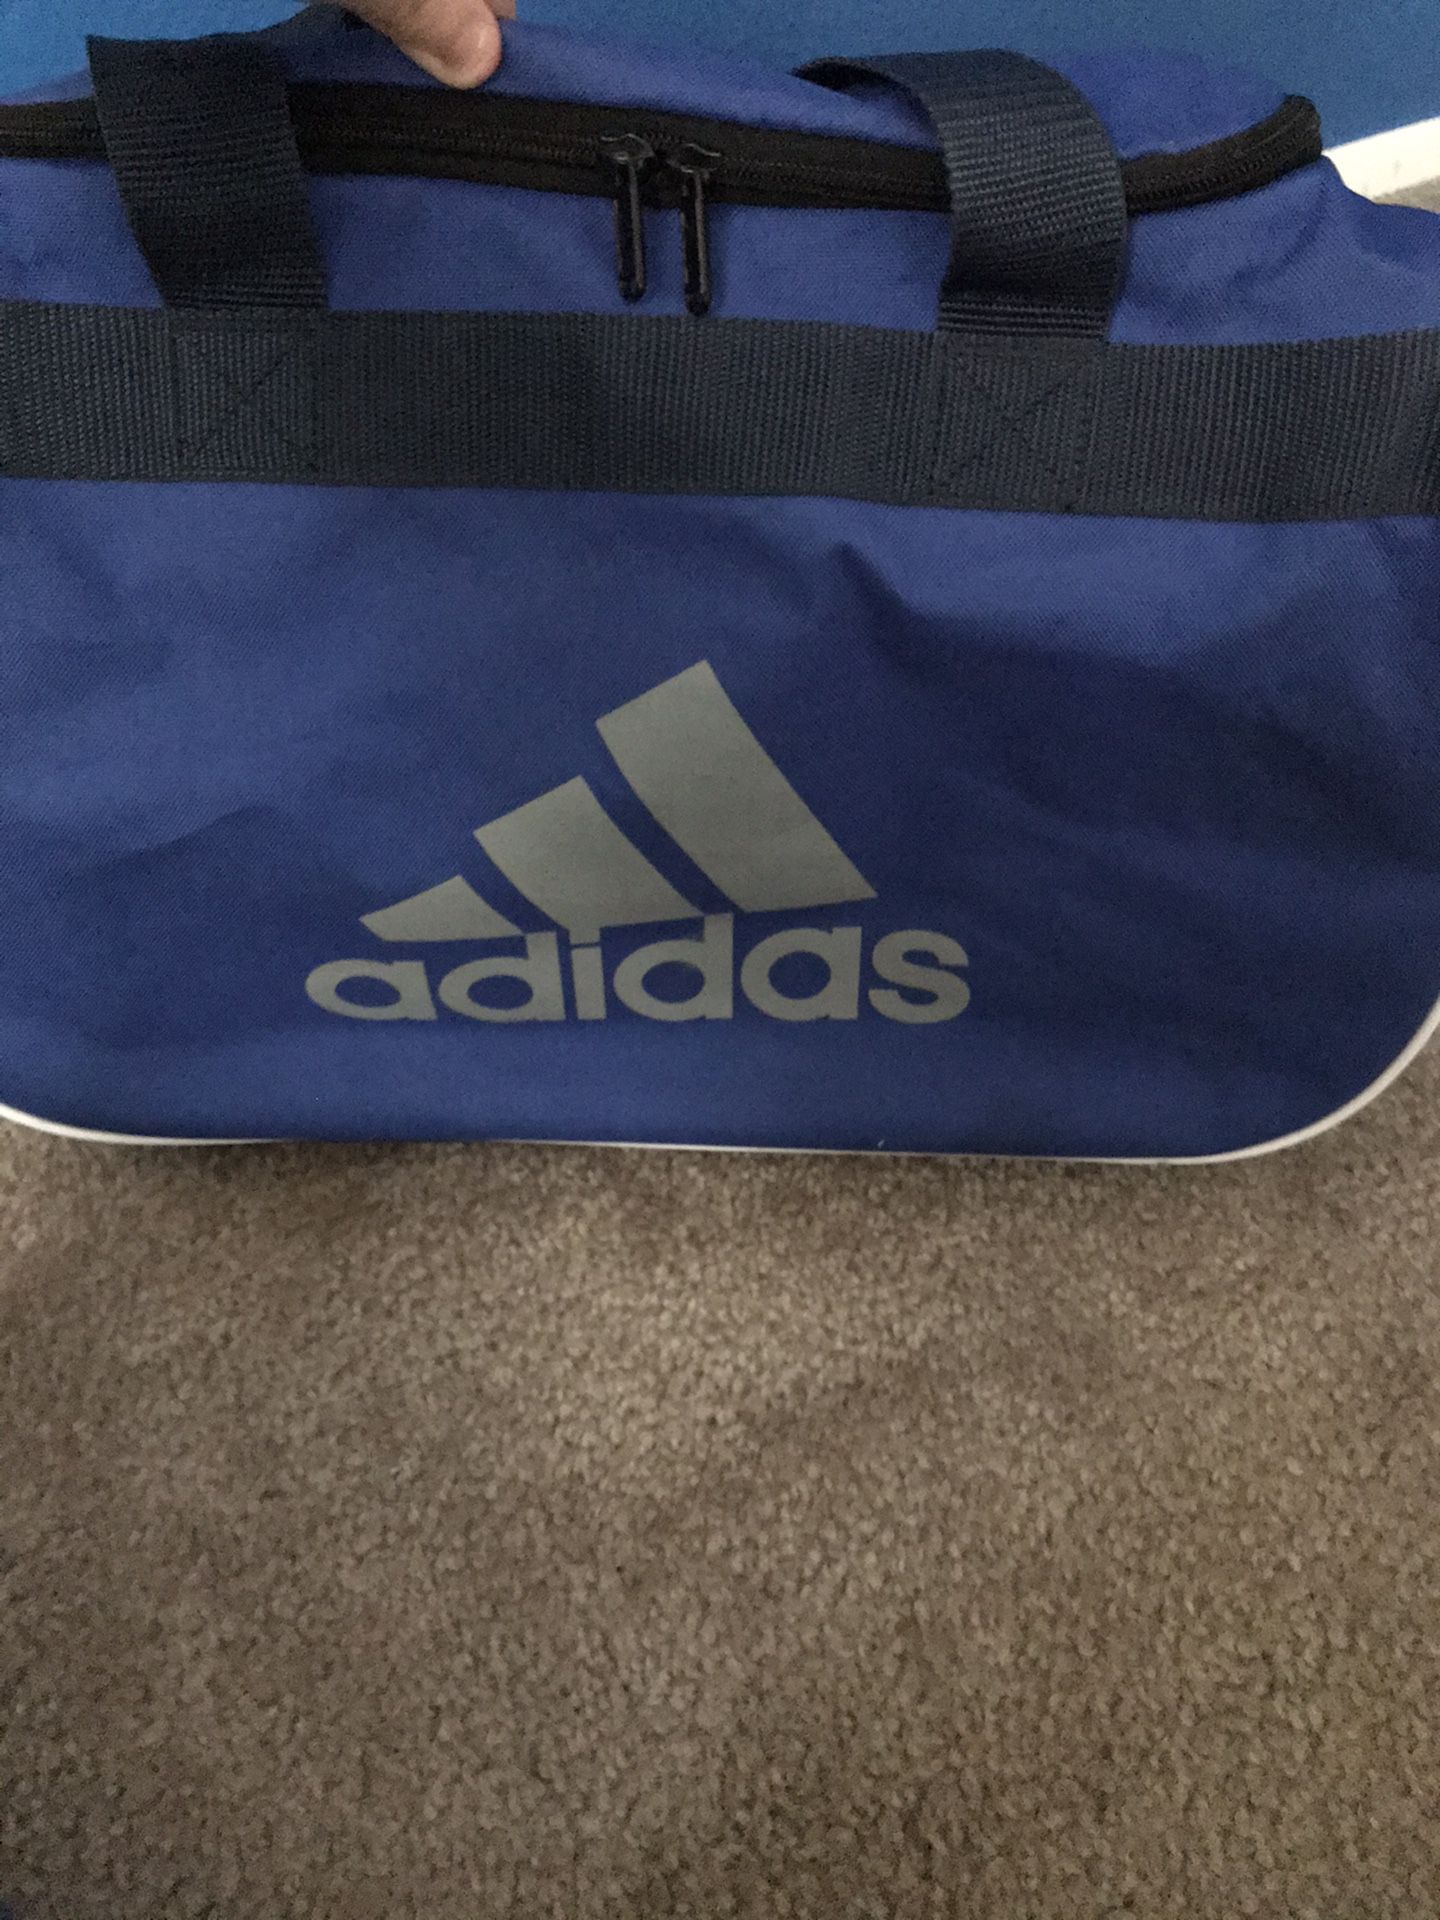 Adidas Diablo duffle bag